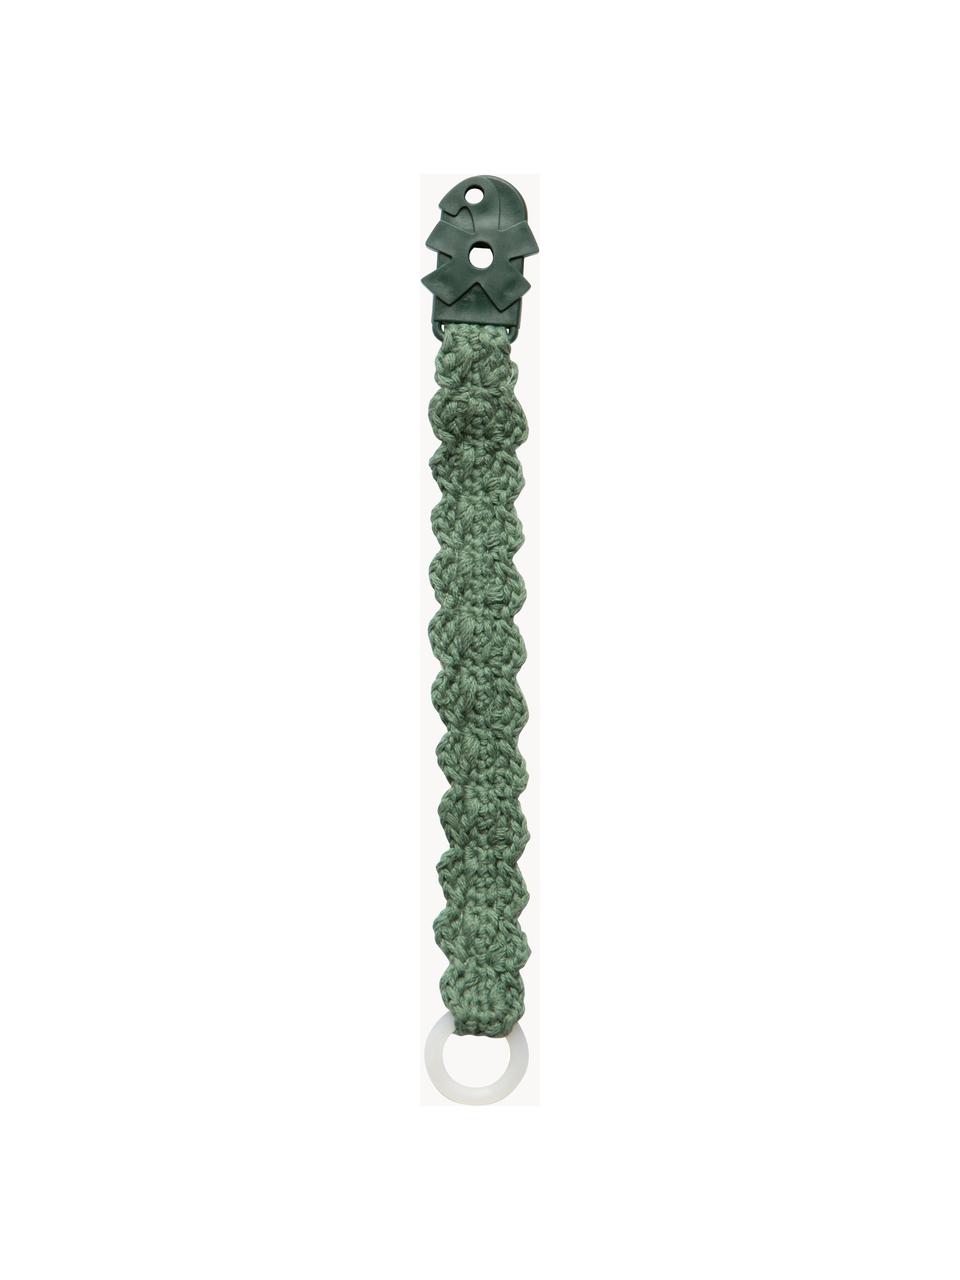 Clip protage chupetes artesanal Crochet, Verde oscuro, An 3 x L 20 cm